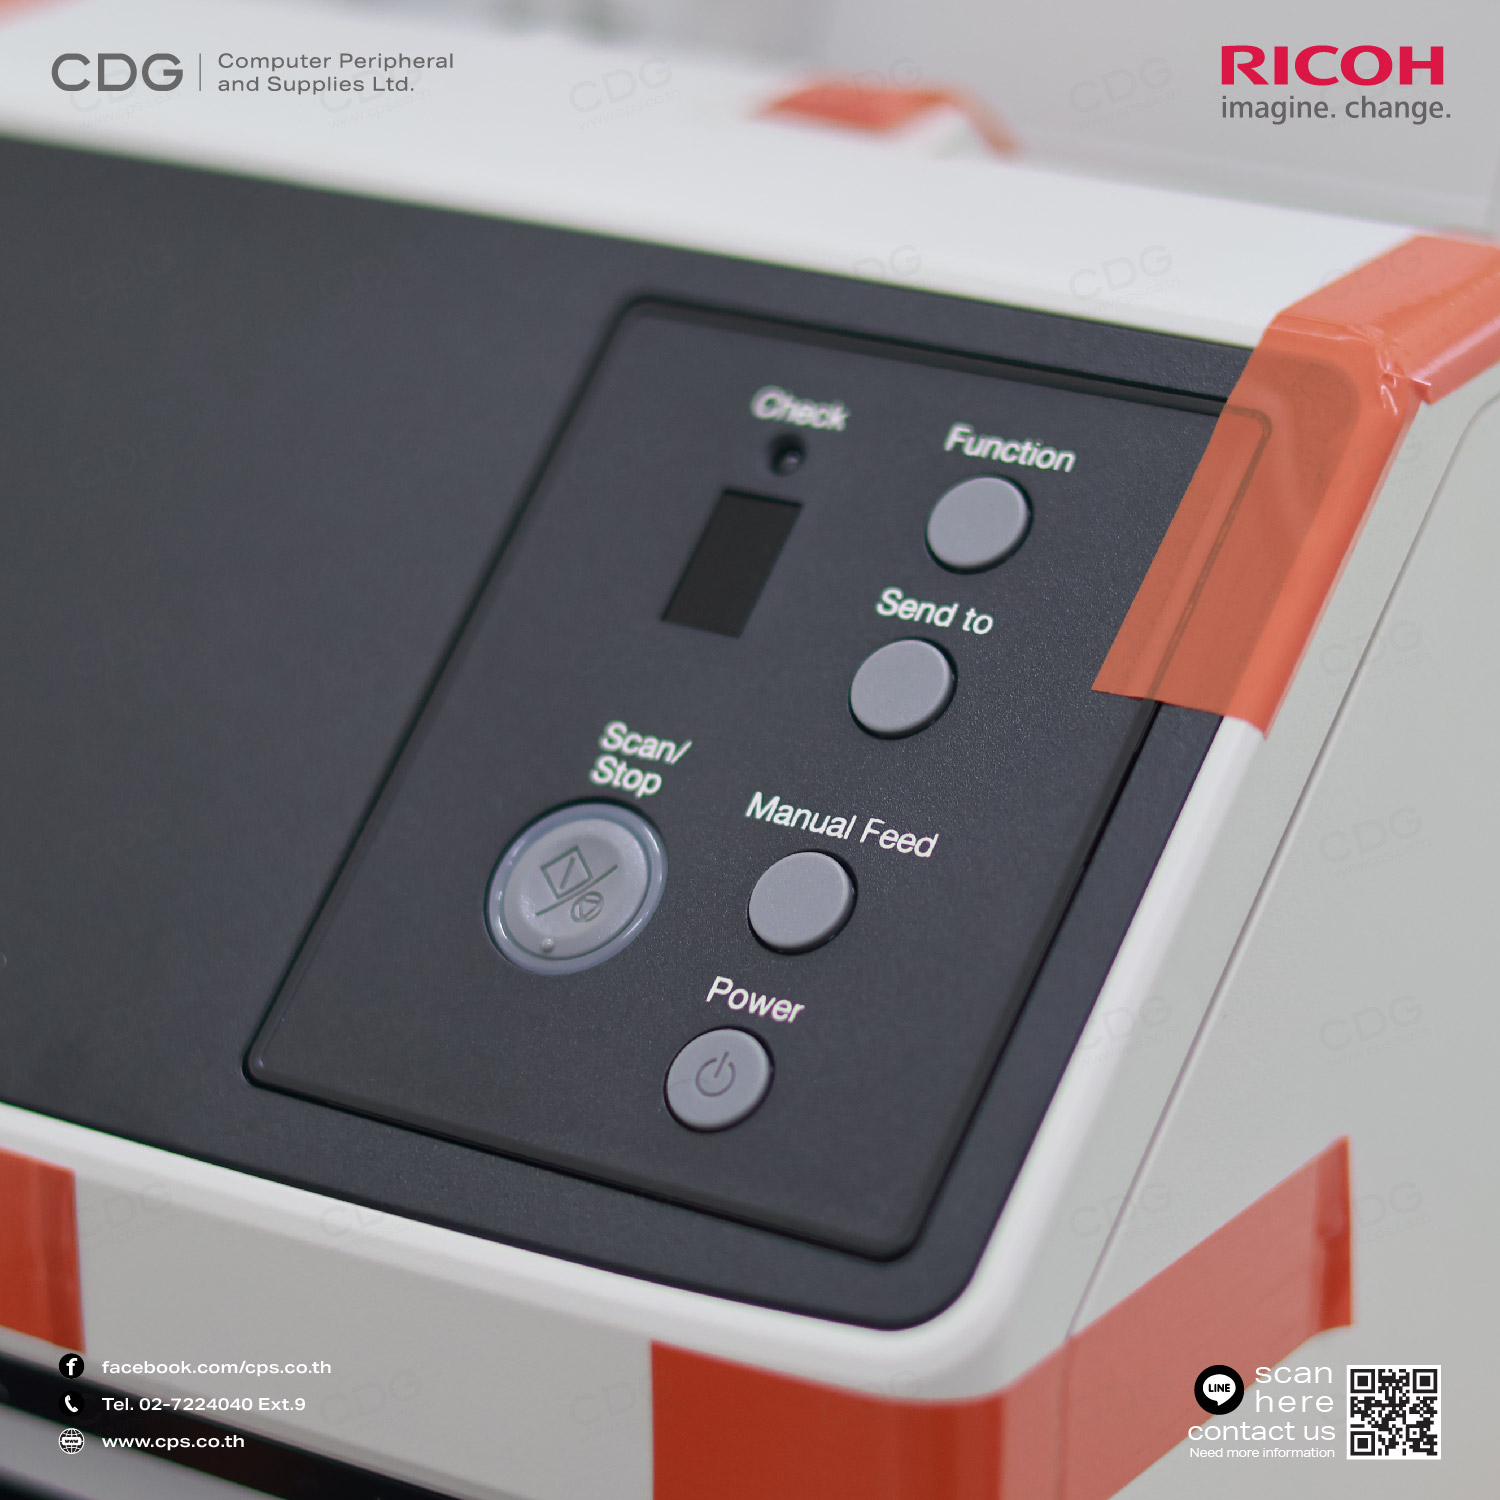 Ricoh Fujitsu Image Scanner Fi-8150U